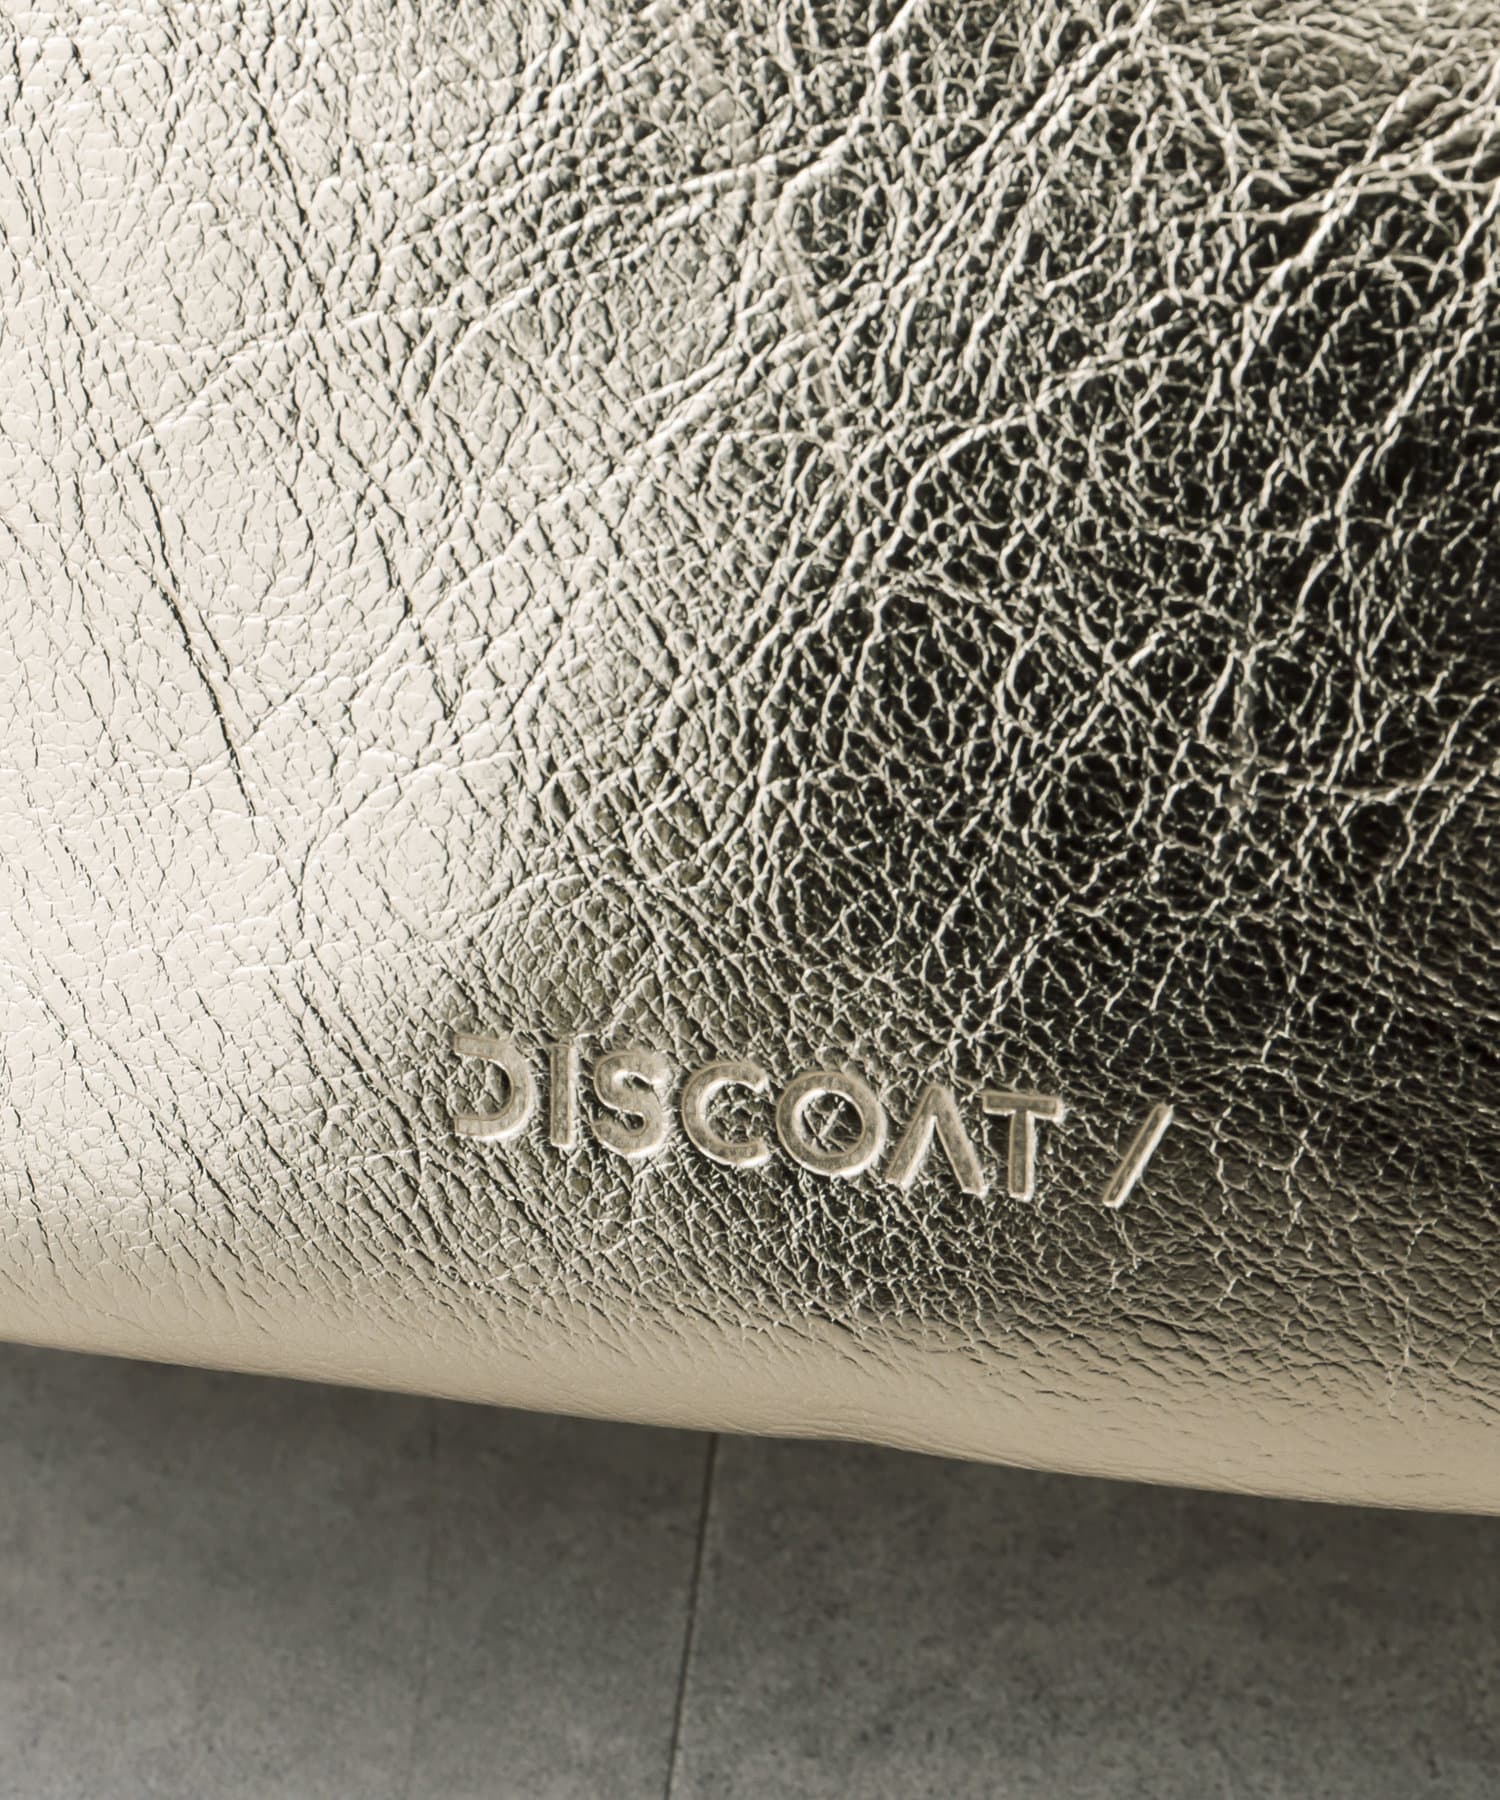 DISCOAT(ディスコート) 【軽量】フリーハンドルショルダーバッグ